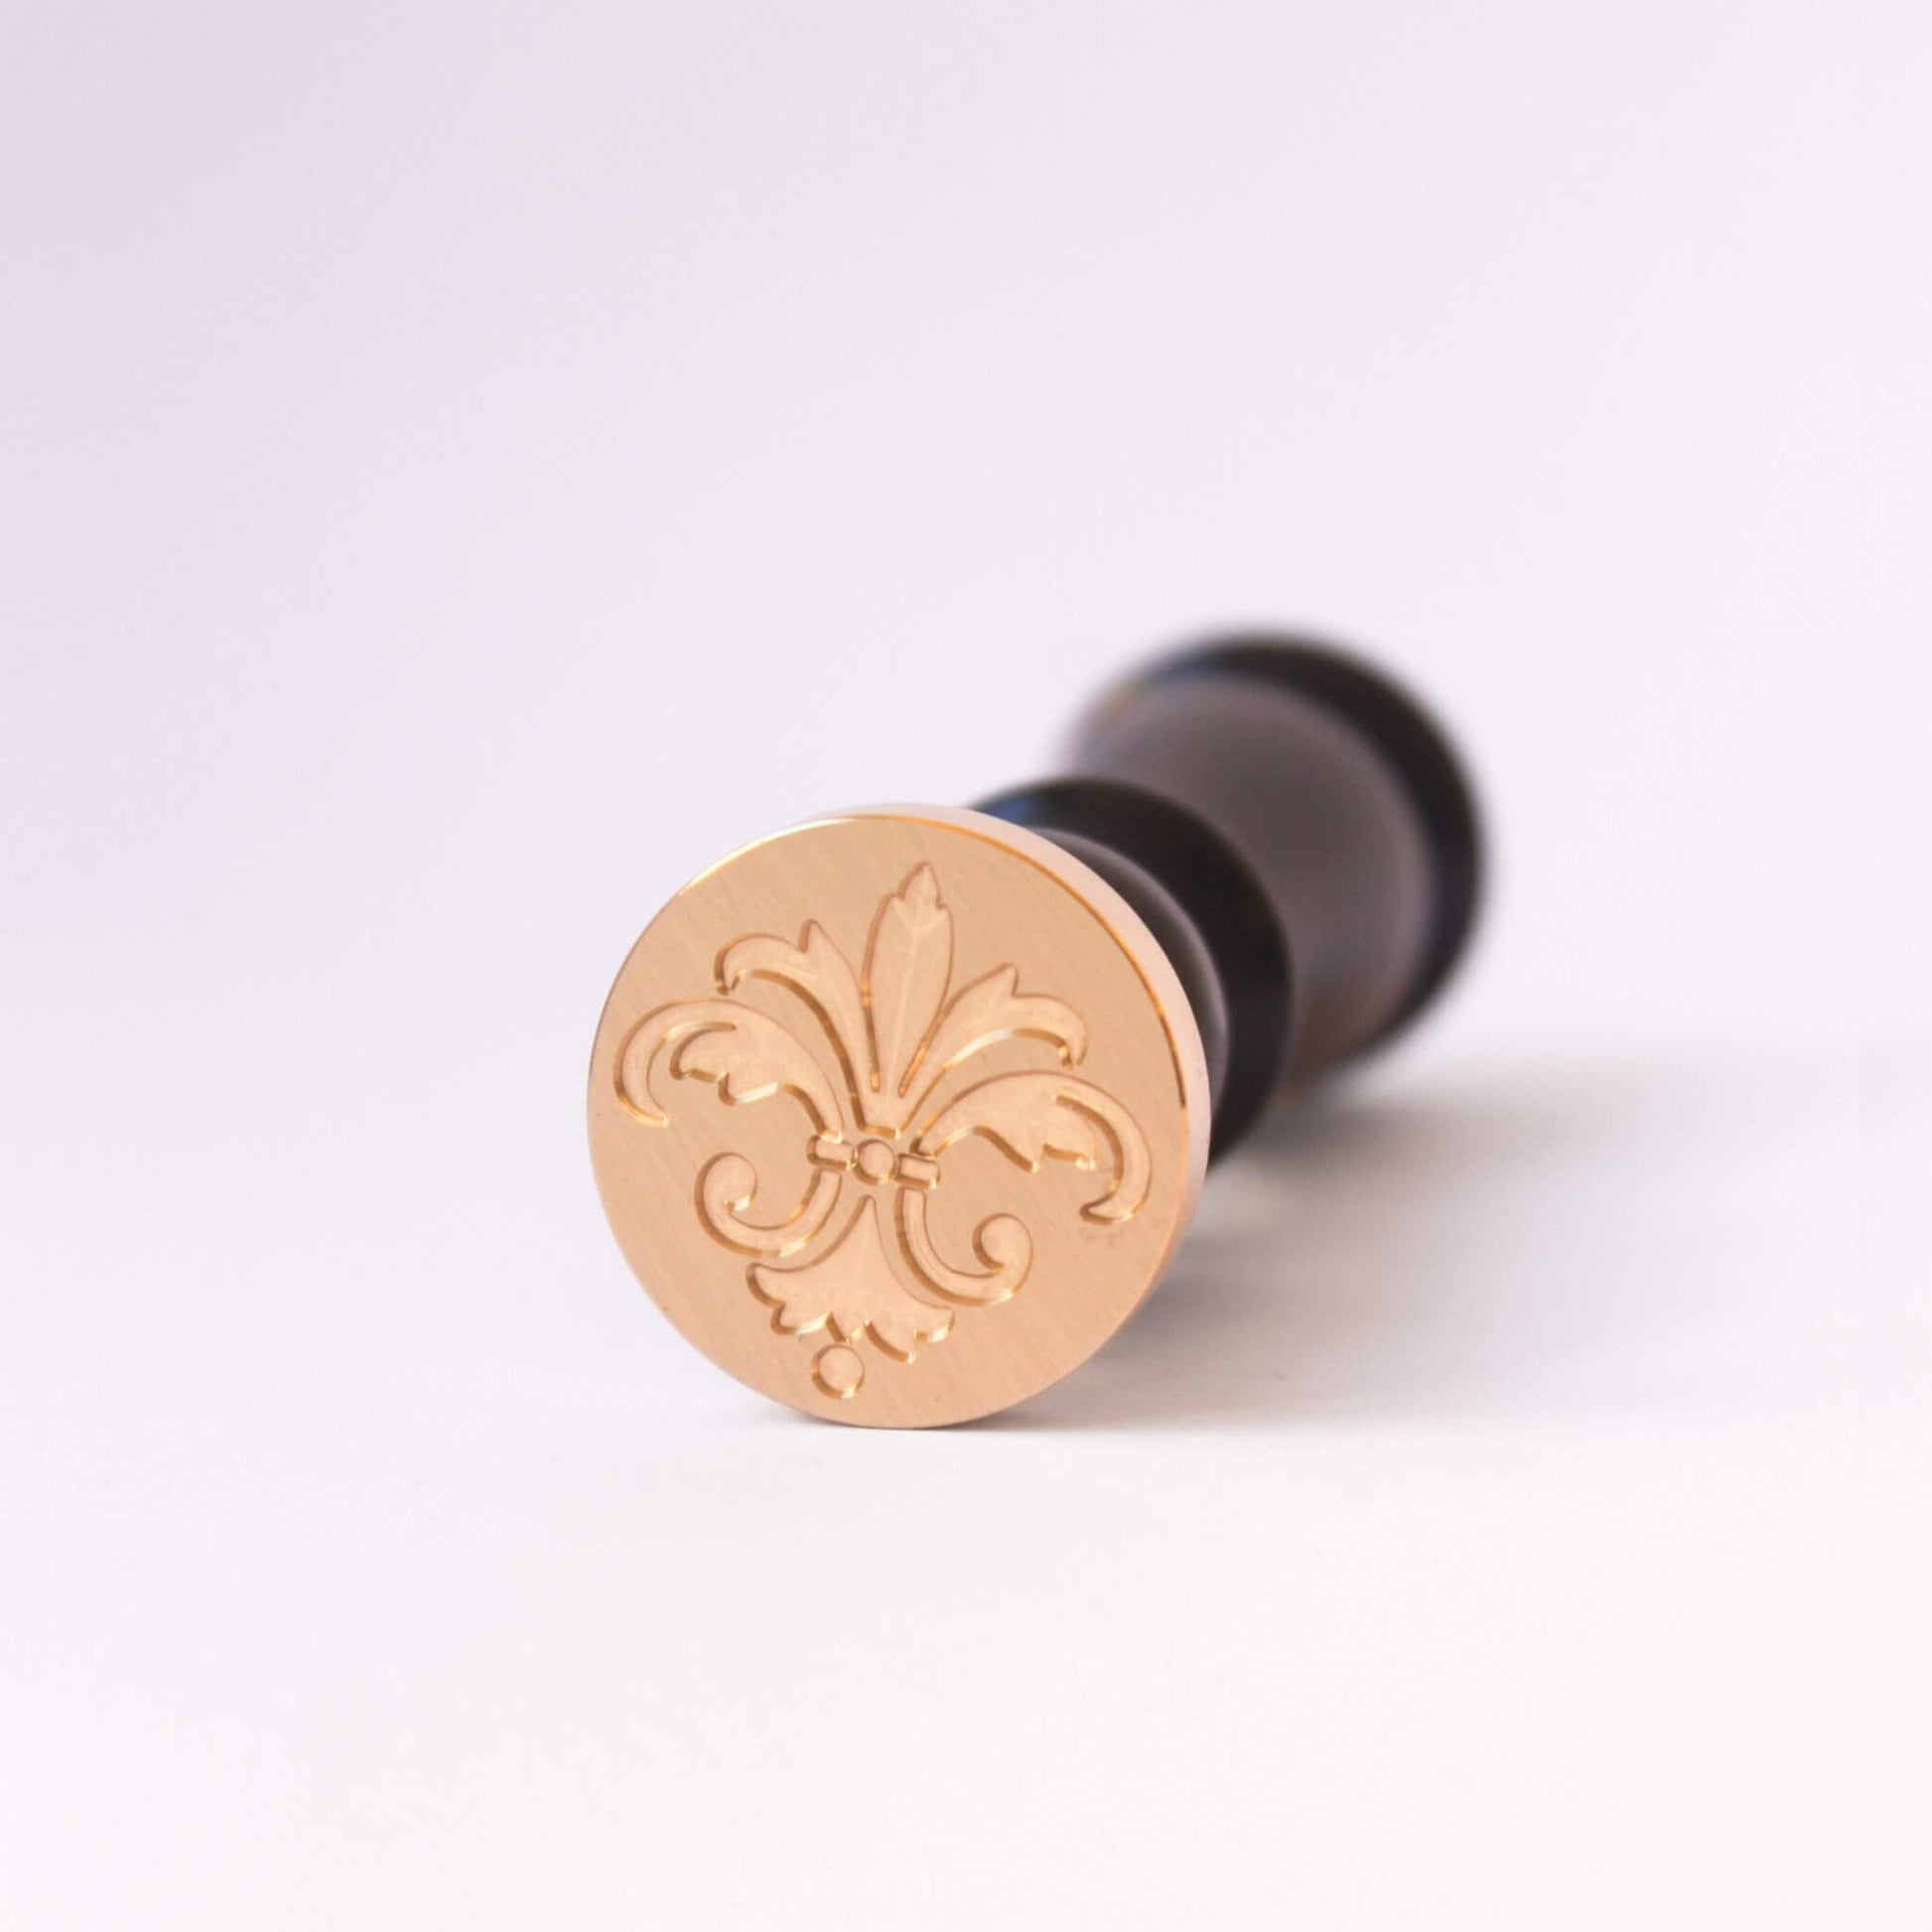 Florentine wax seal withItalian fleur de lis symbol on wax stamp head